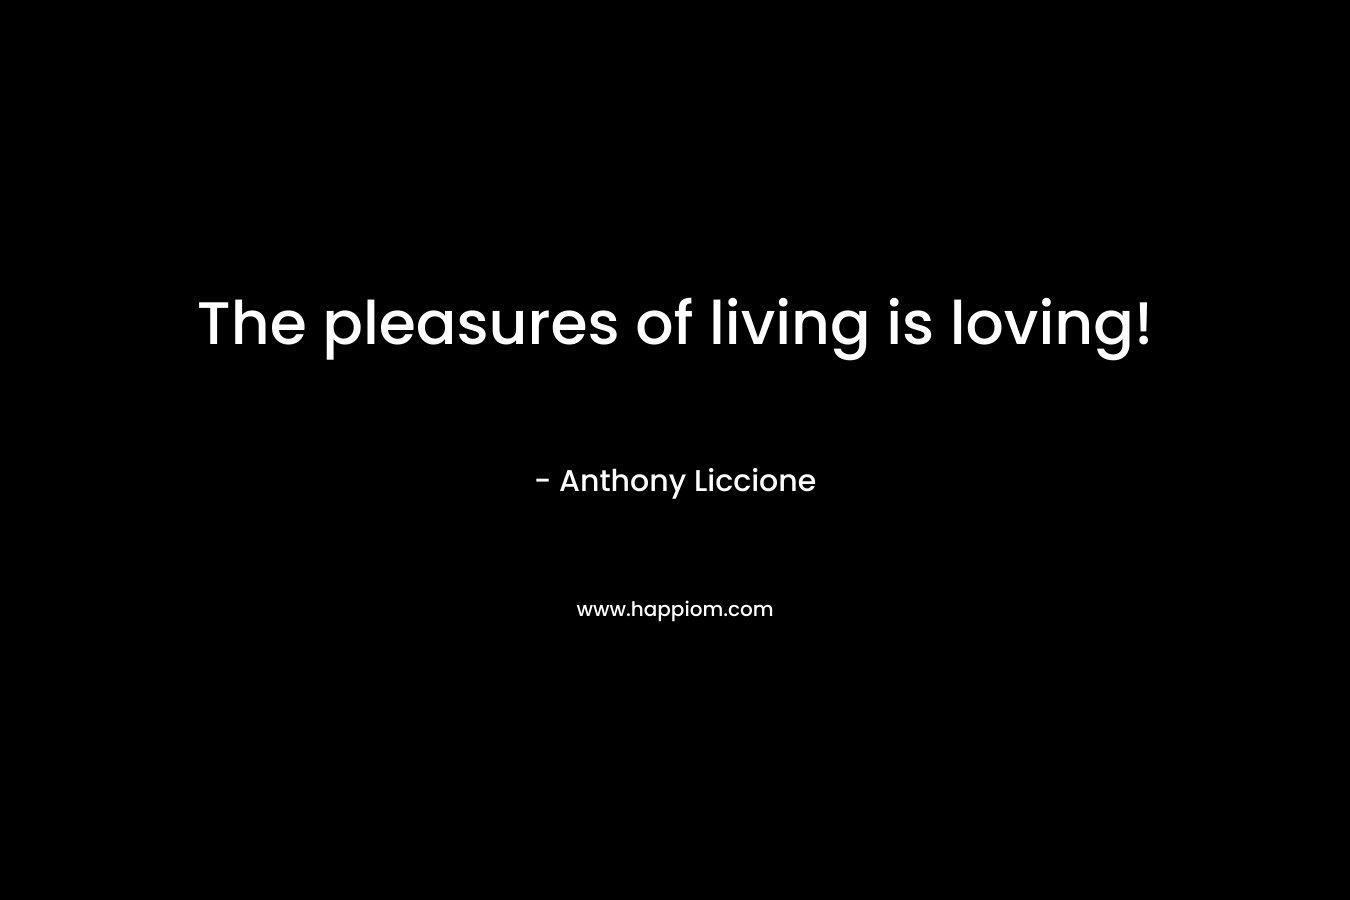 The pleasures of living is loving!